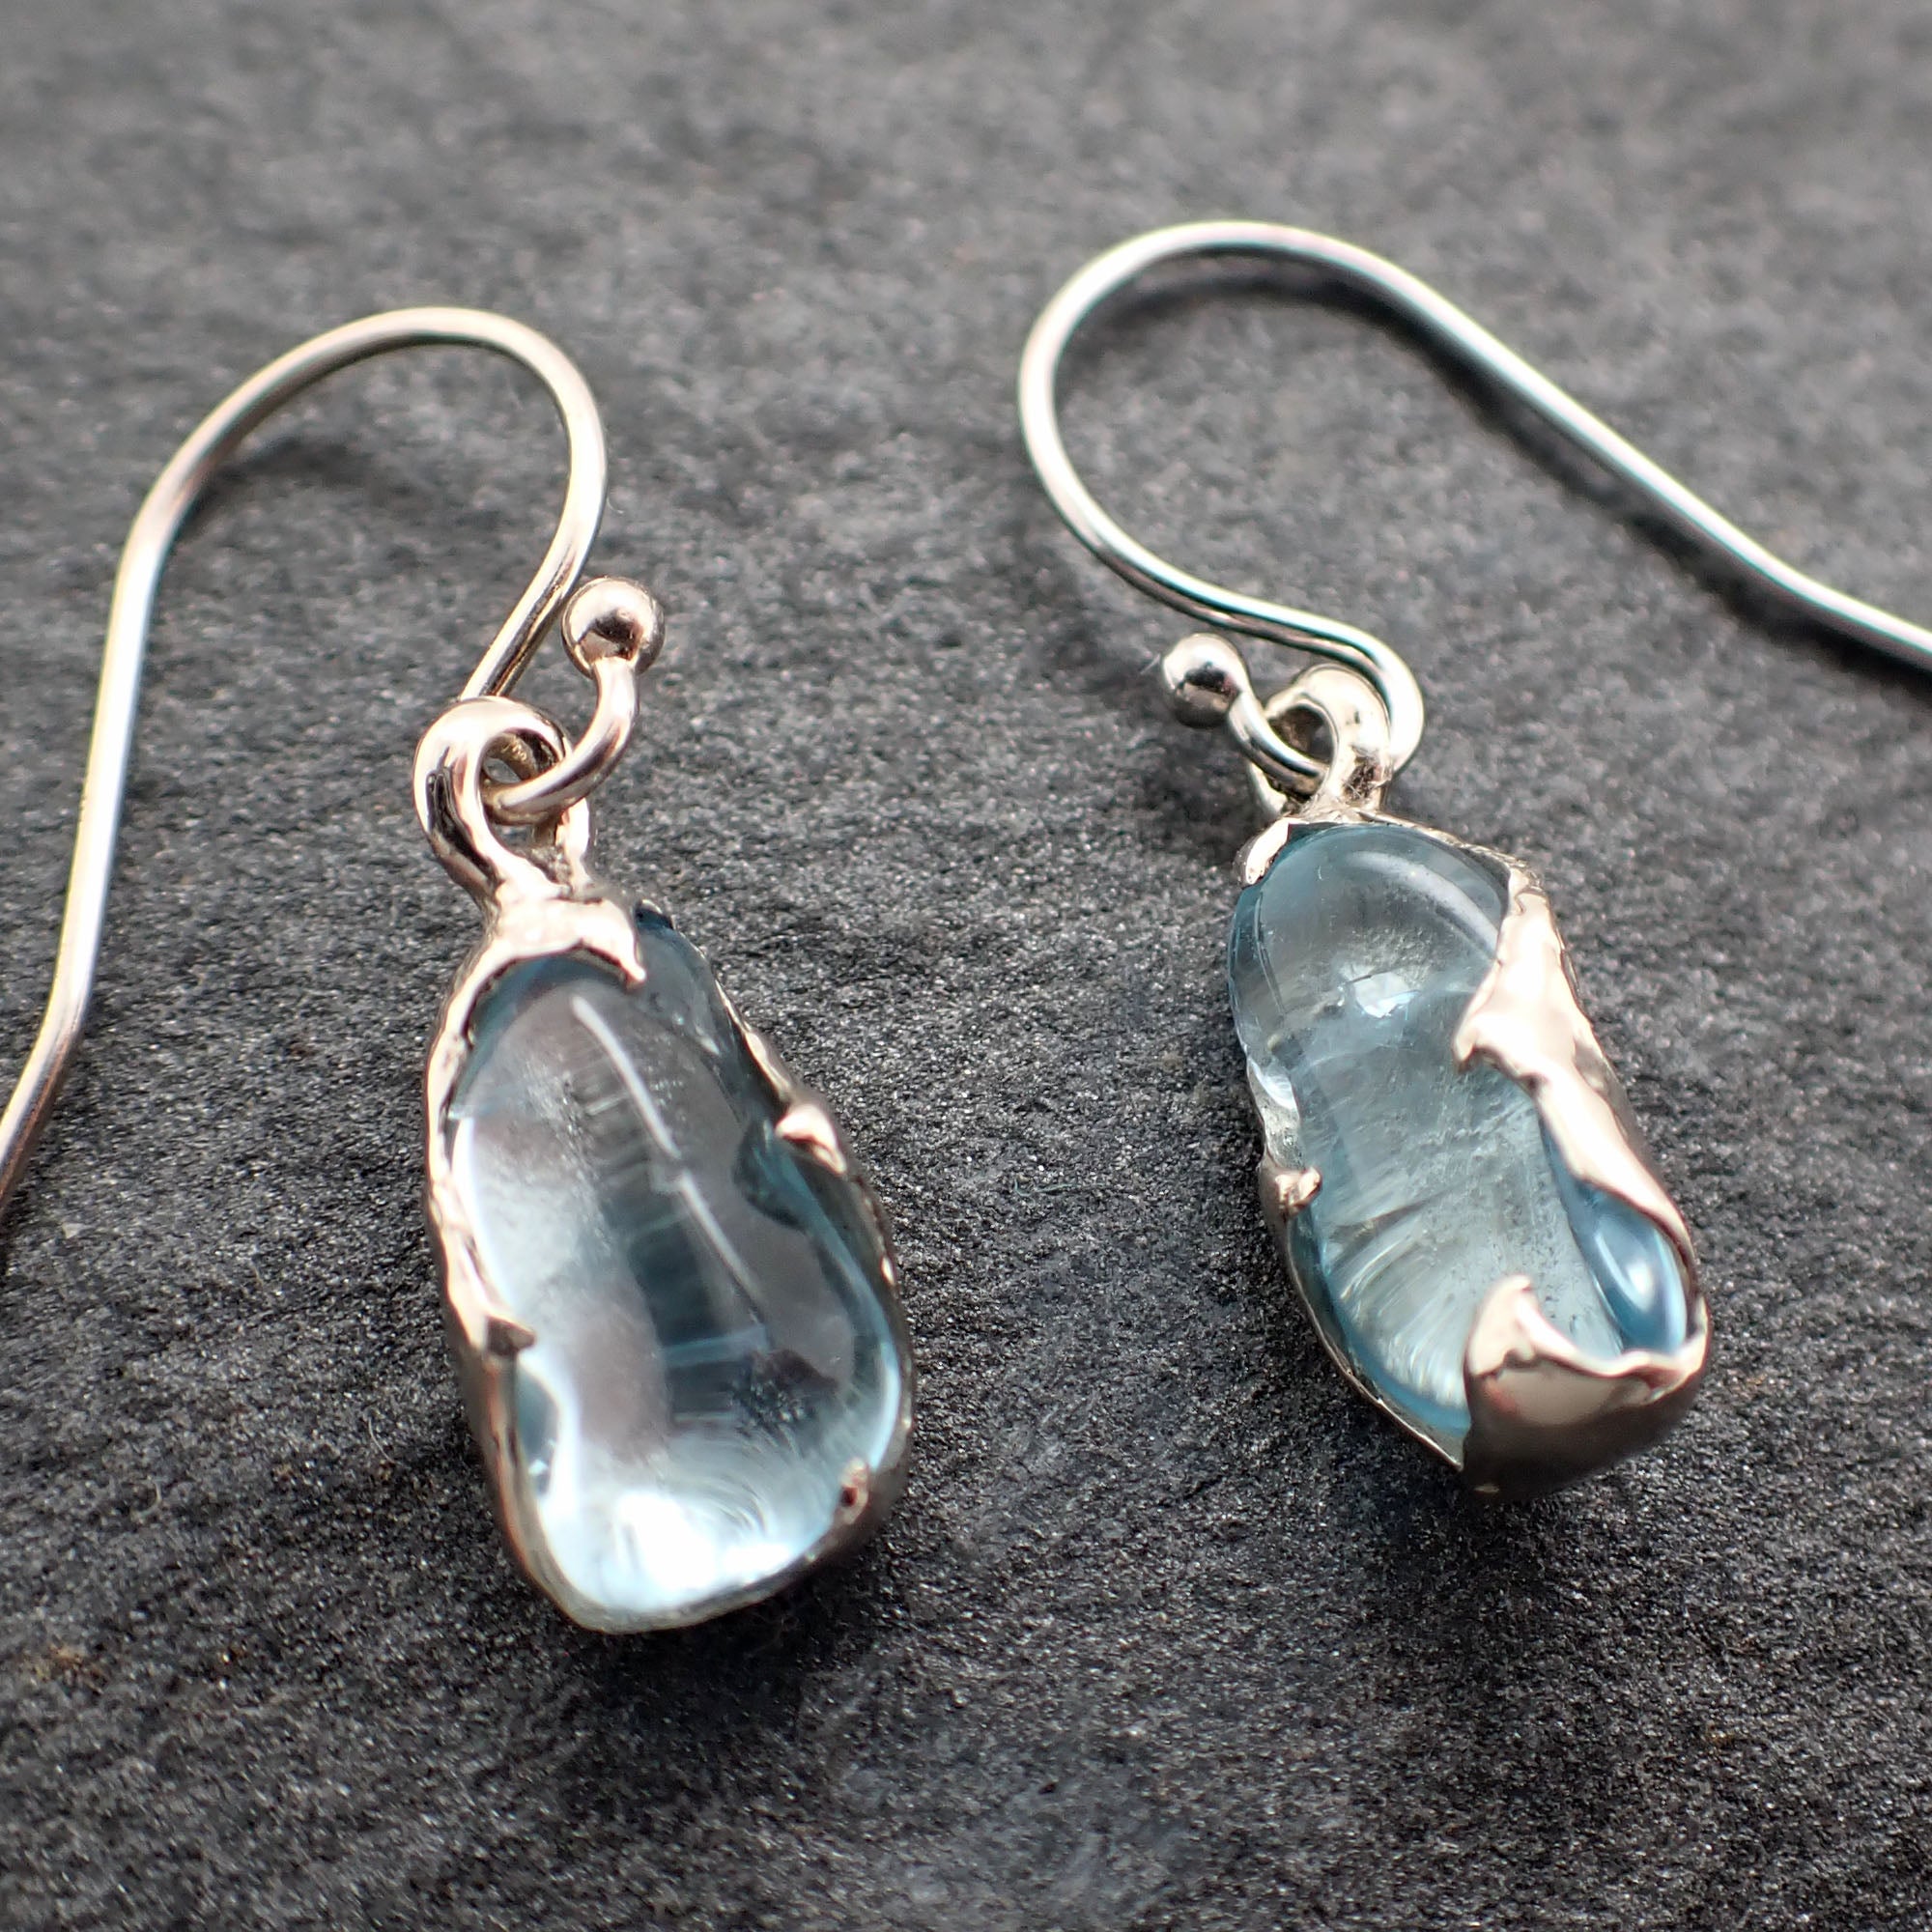 aquamarine pebble candy earrings dangle white 14k 2743 Alternative Engagement